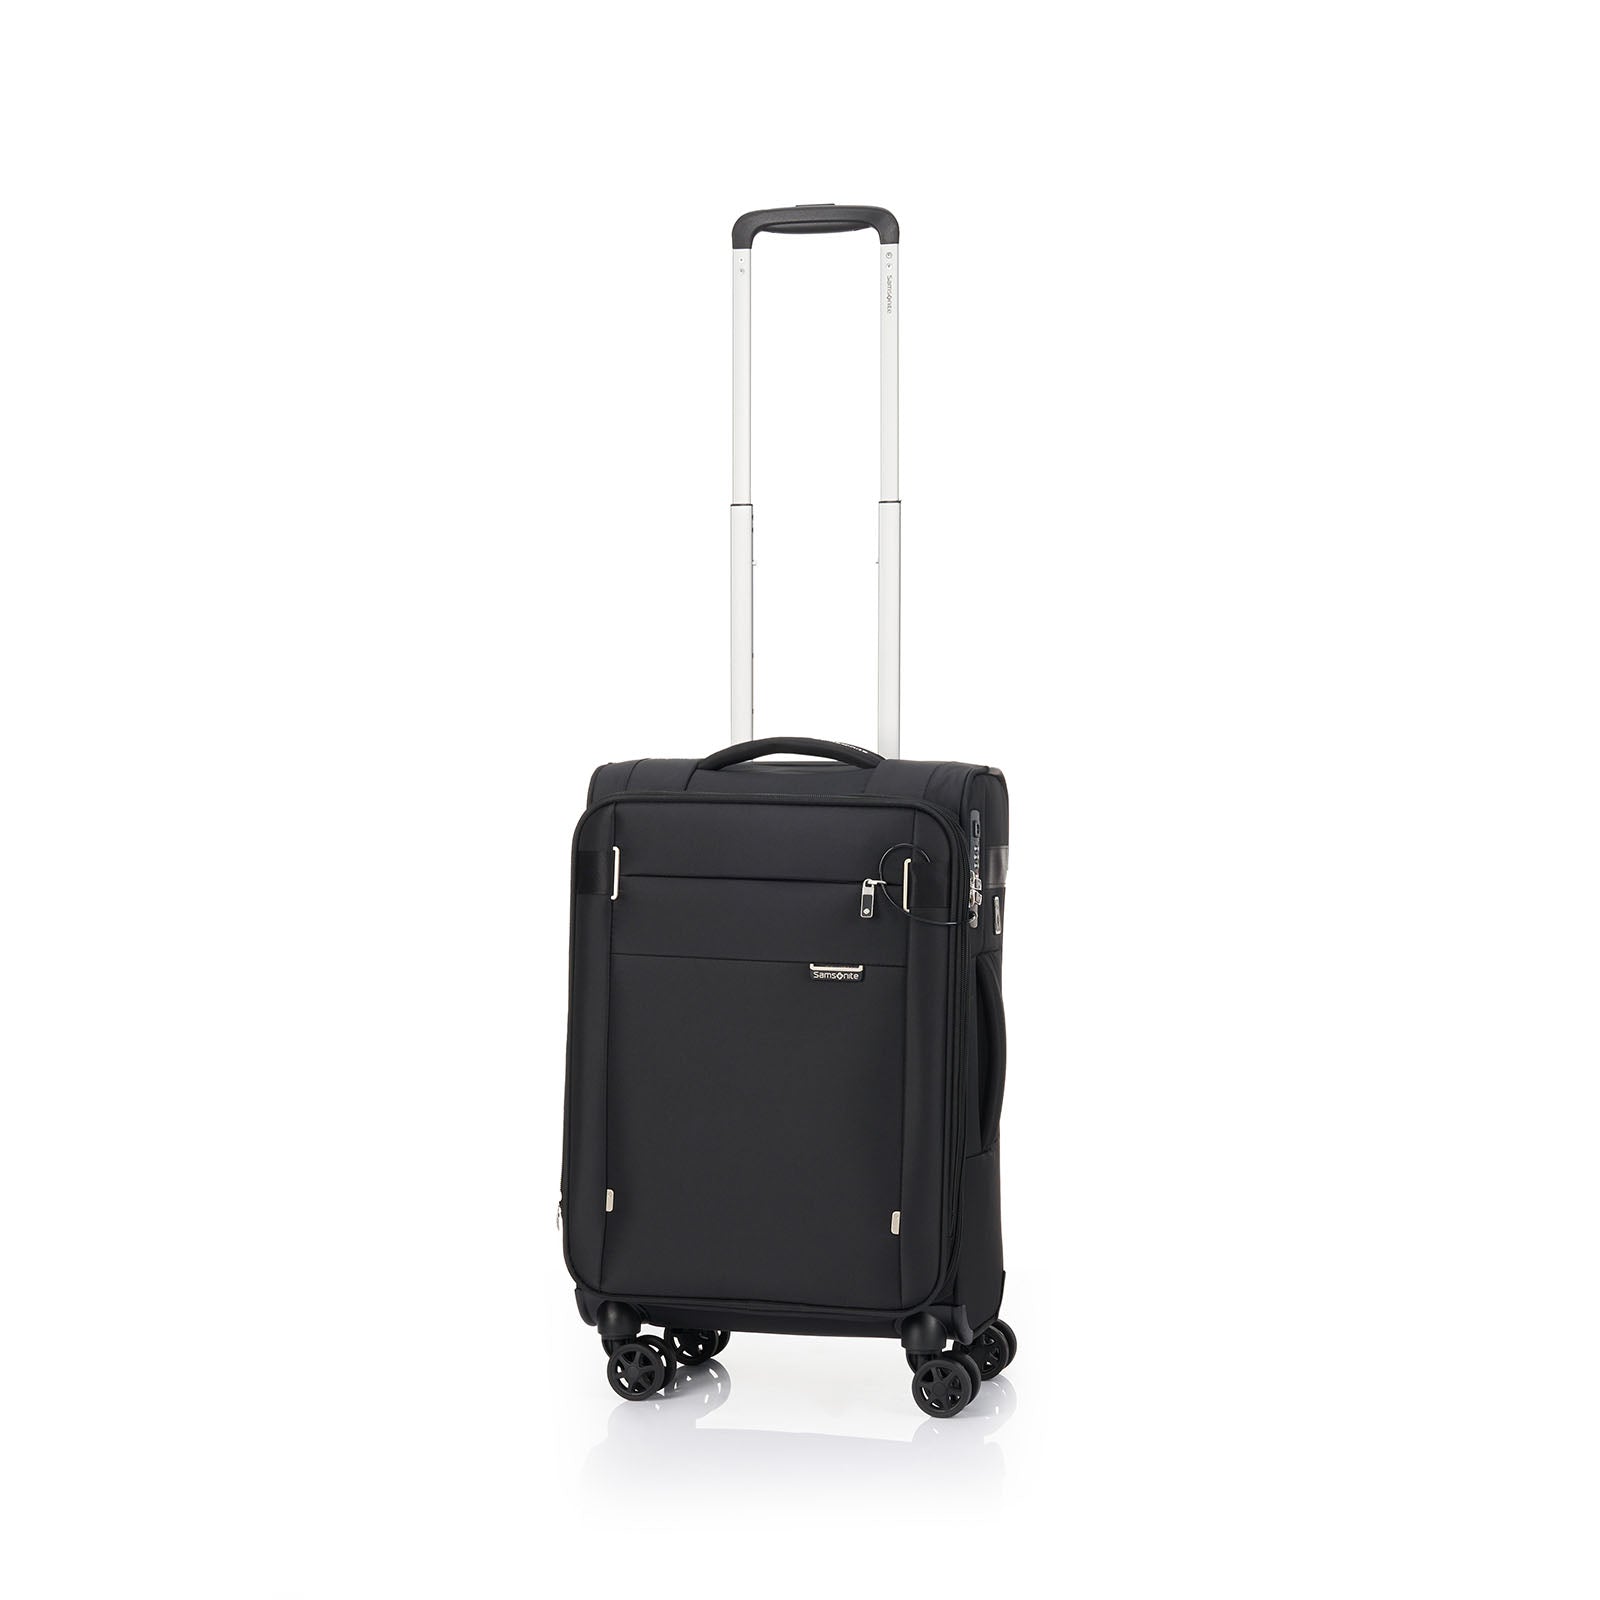 Samsonite-City-Rhythm-Carry-On-55cm-Suitcase-Black-Front-Angle